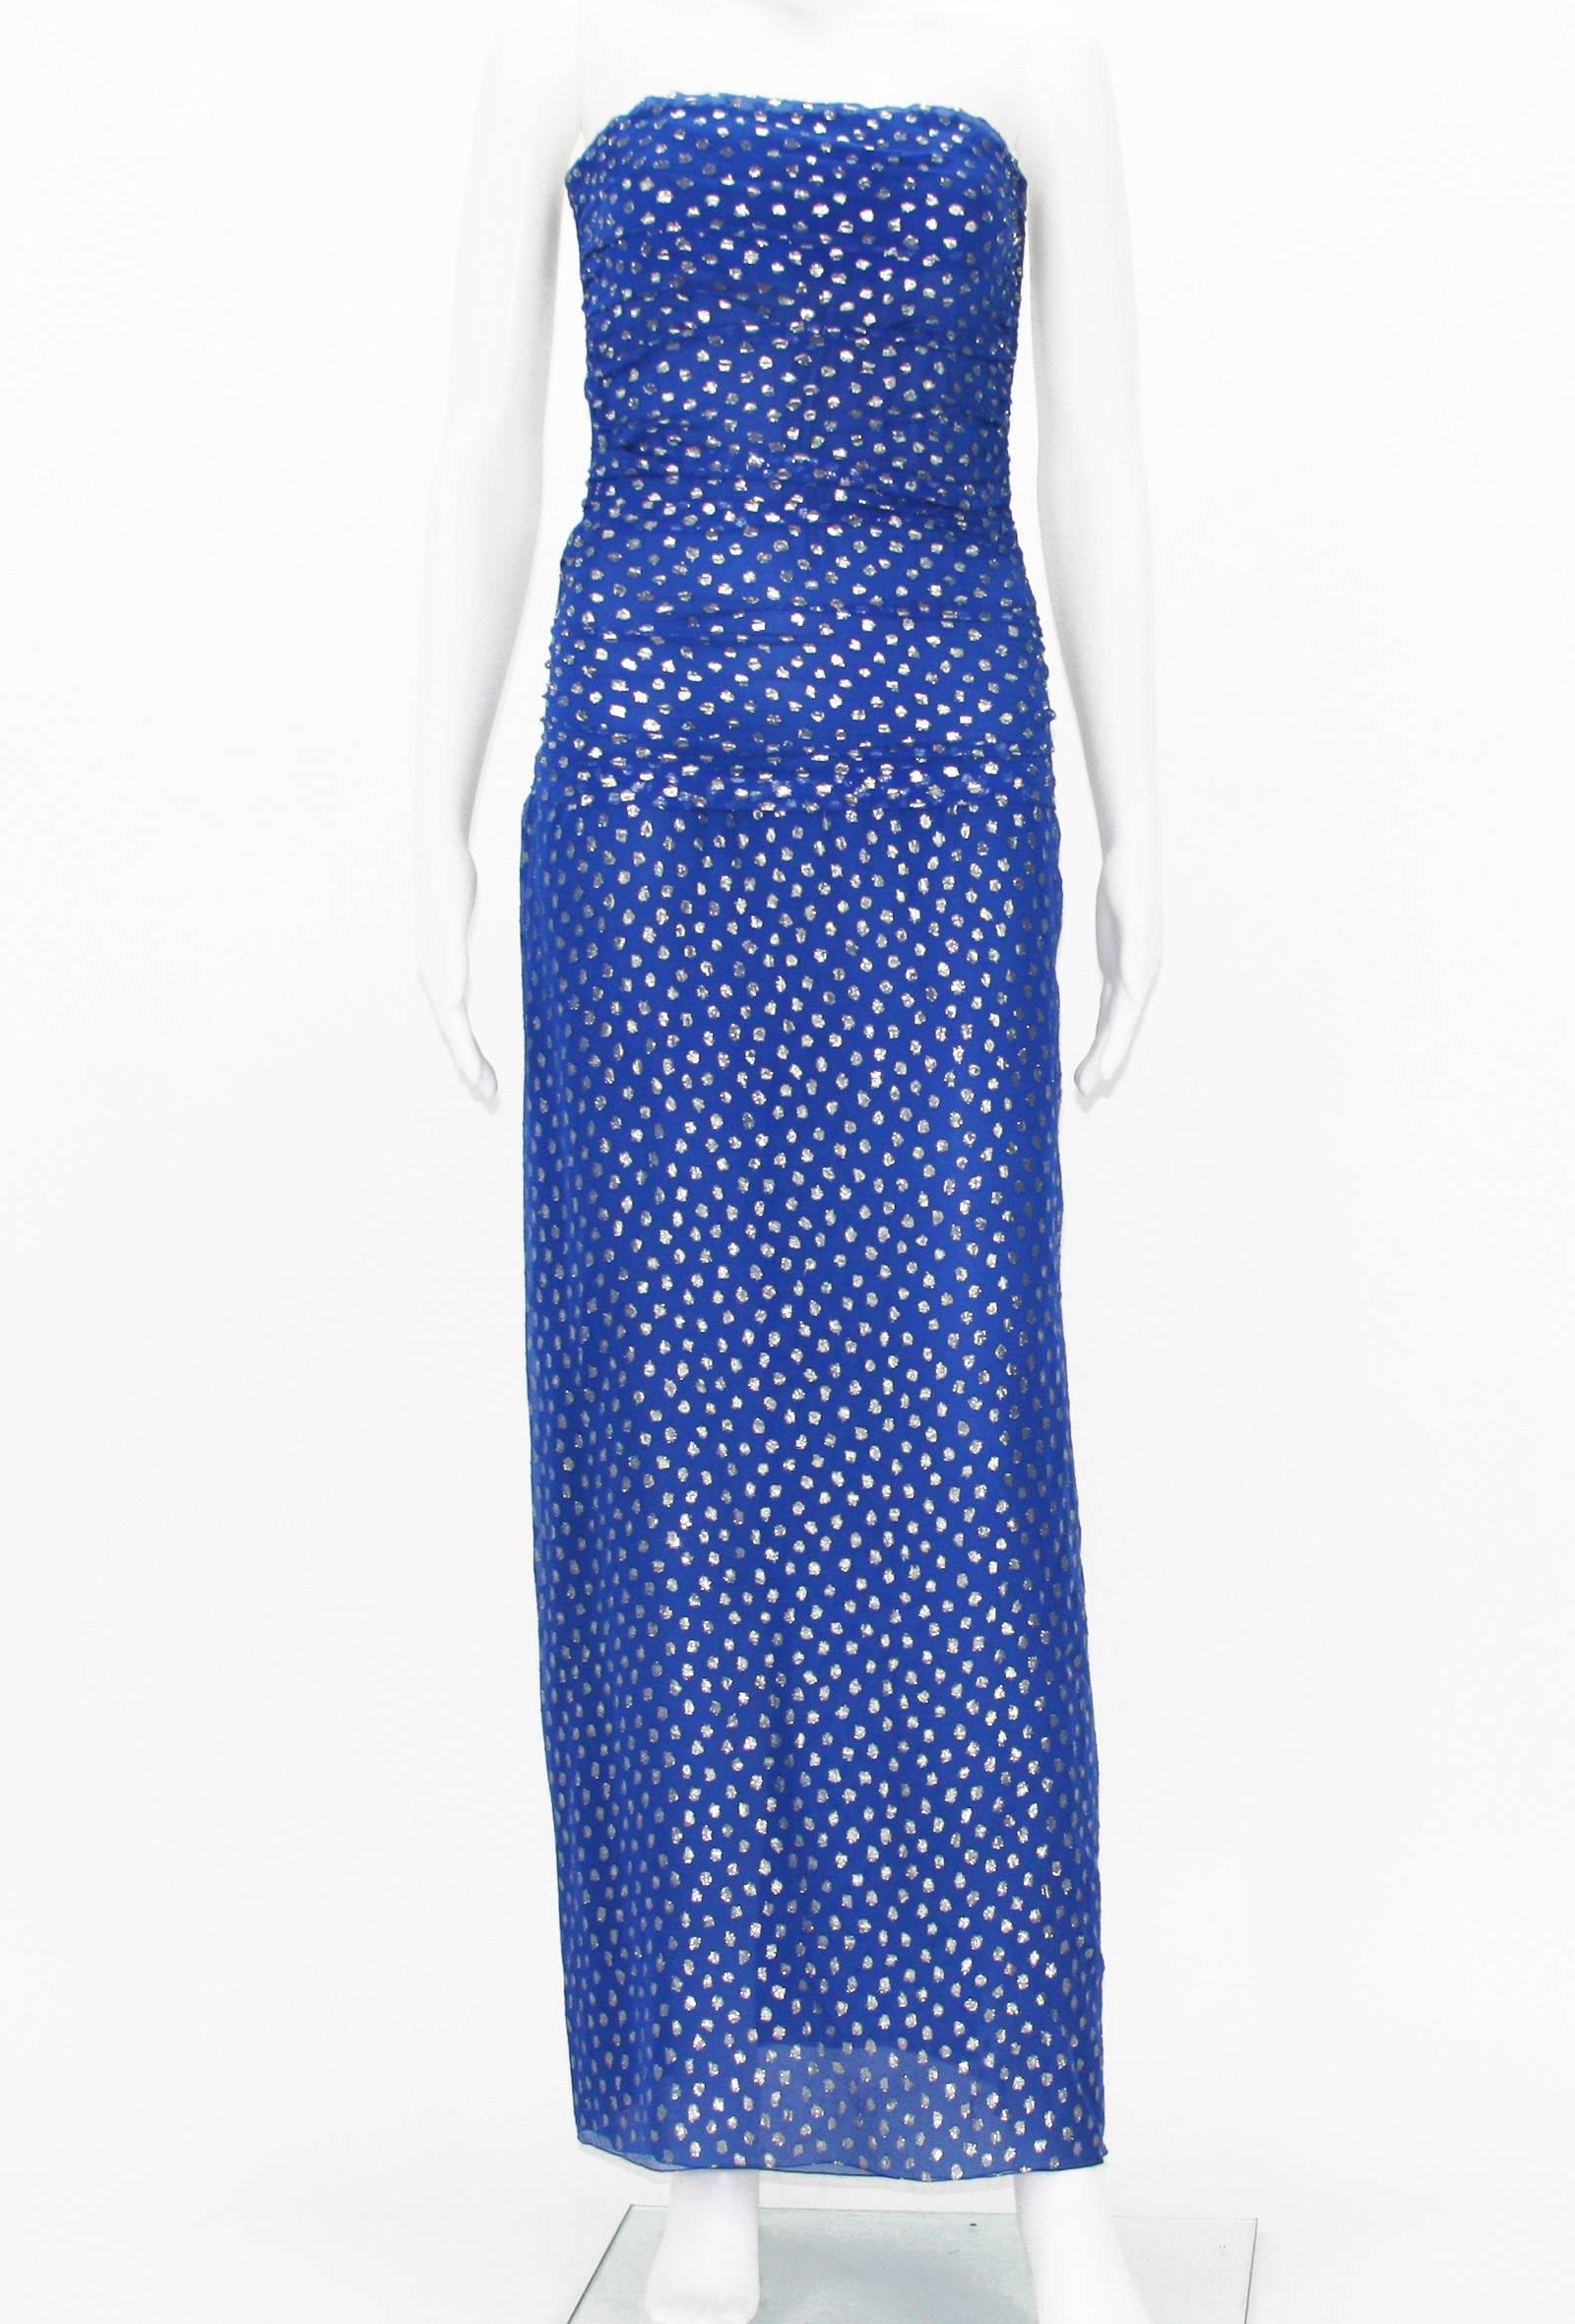 Christian Dior Paris F/W 1976 Numbered Polka Dot Blue Sheer Dress Set 1